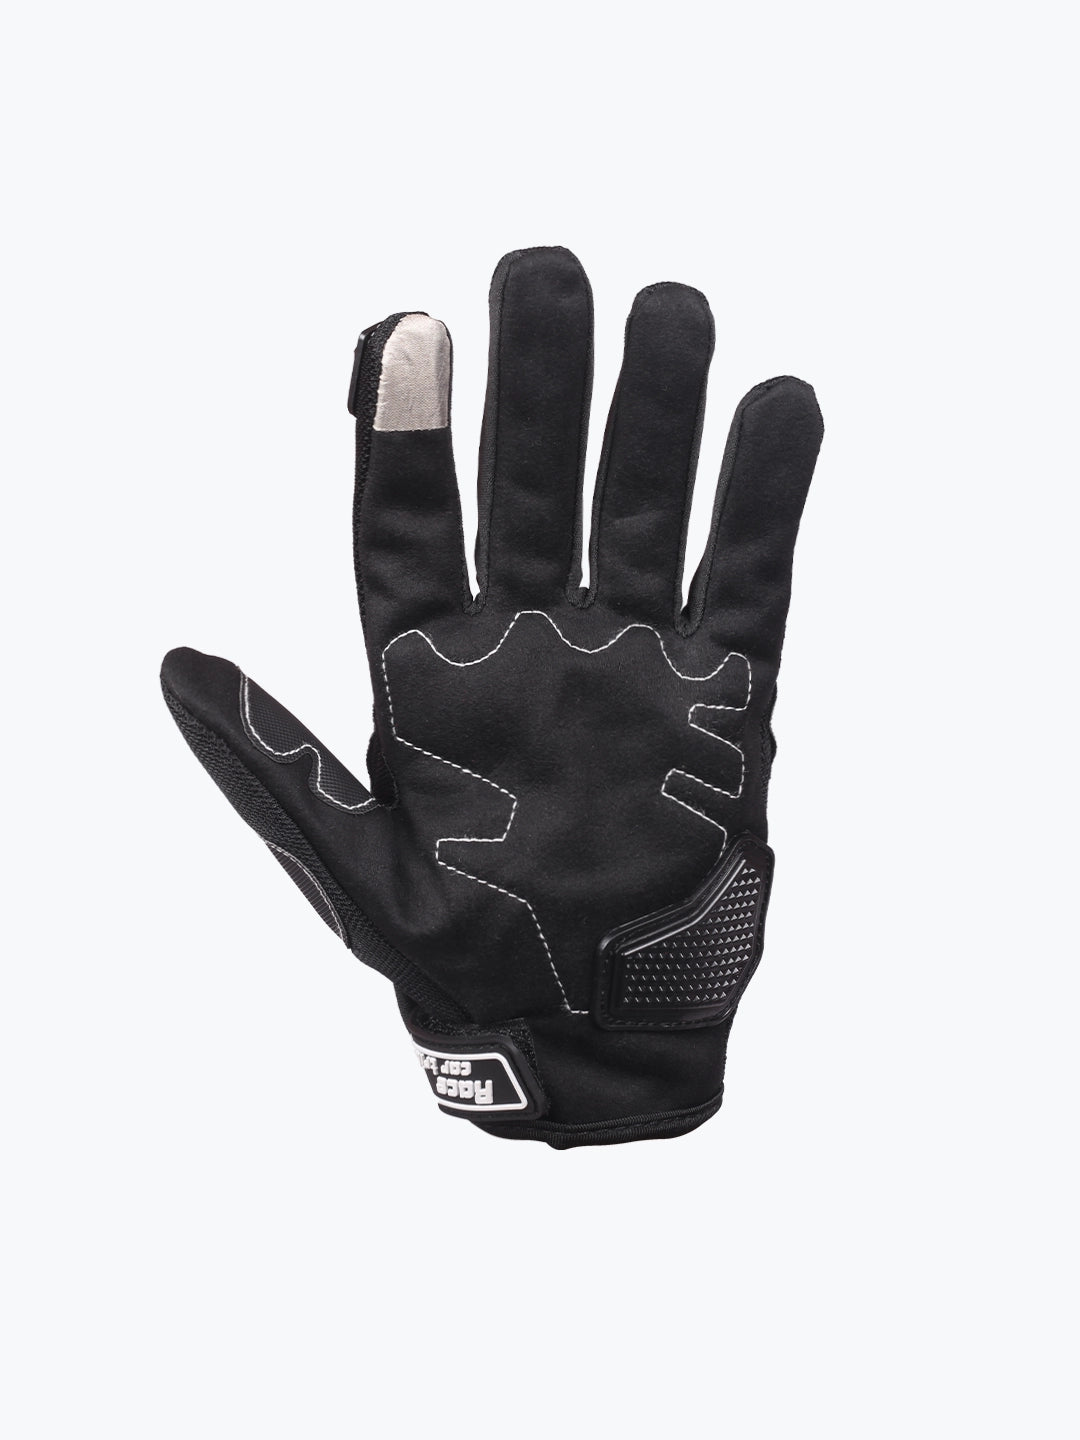 Race Car Tribe Gloves Premium Black